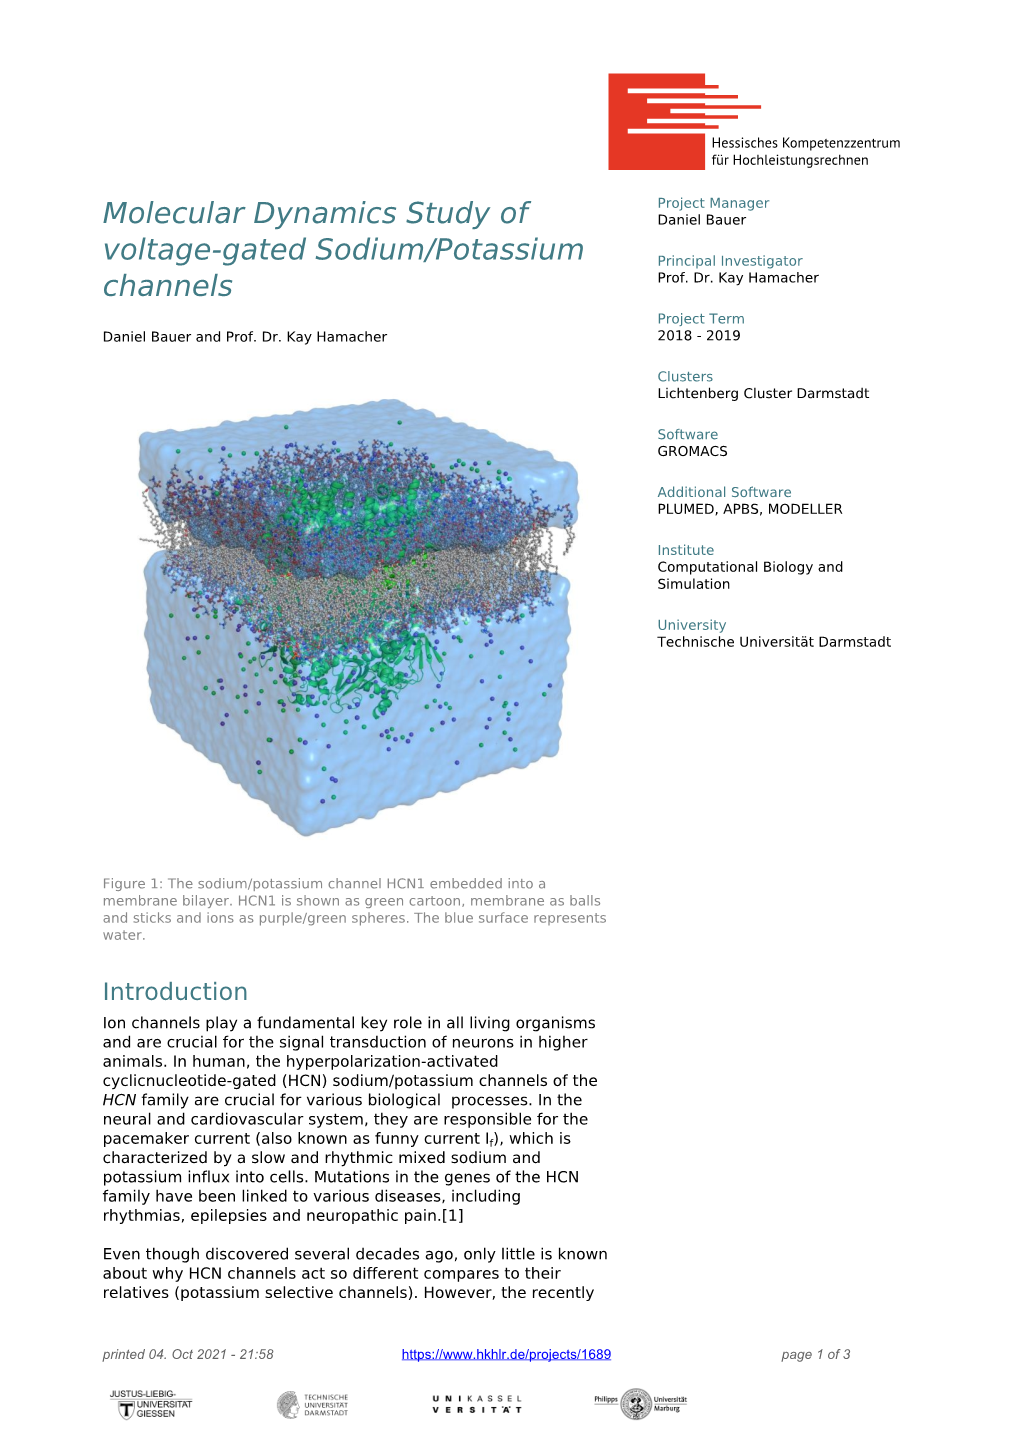 Molecular Dynamics Study of Voltage-Gated Sodium/Potassium Channels Daniel Bauer and Prof